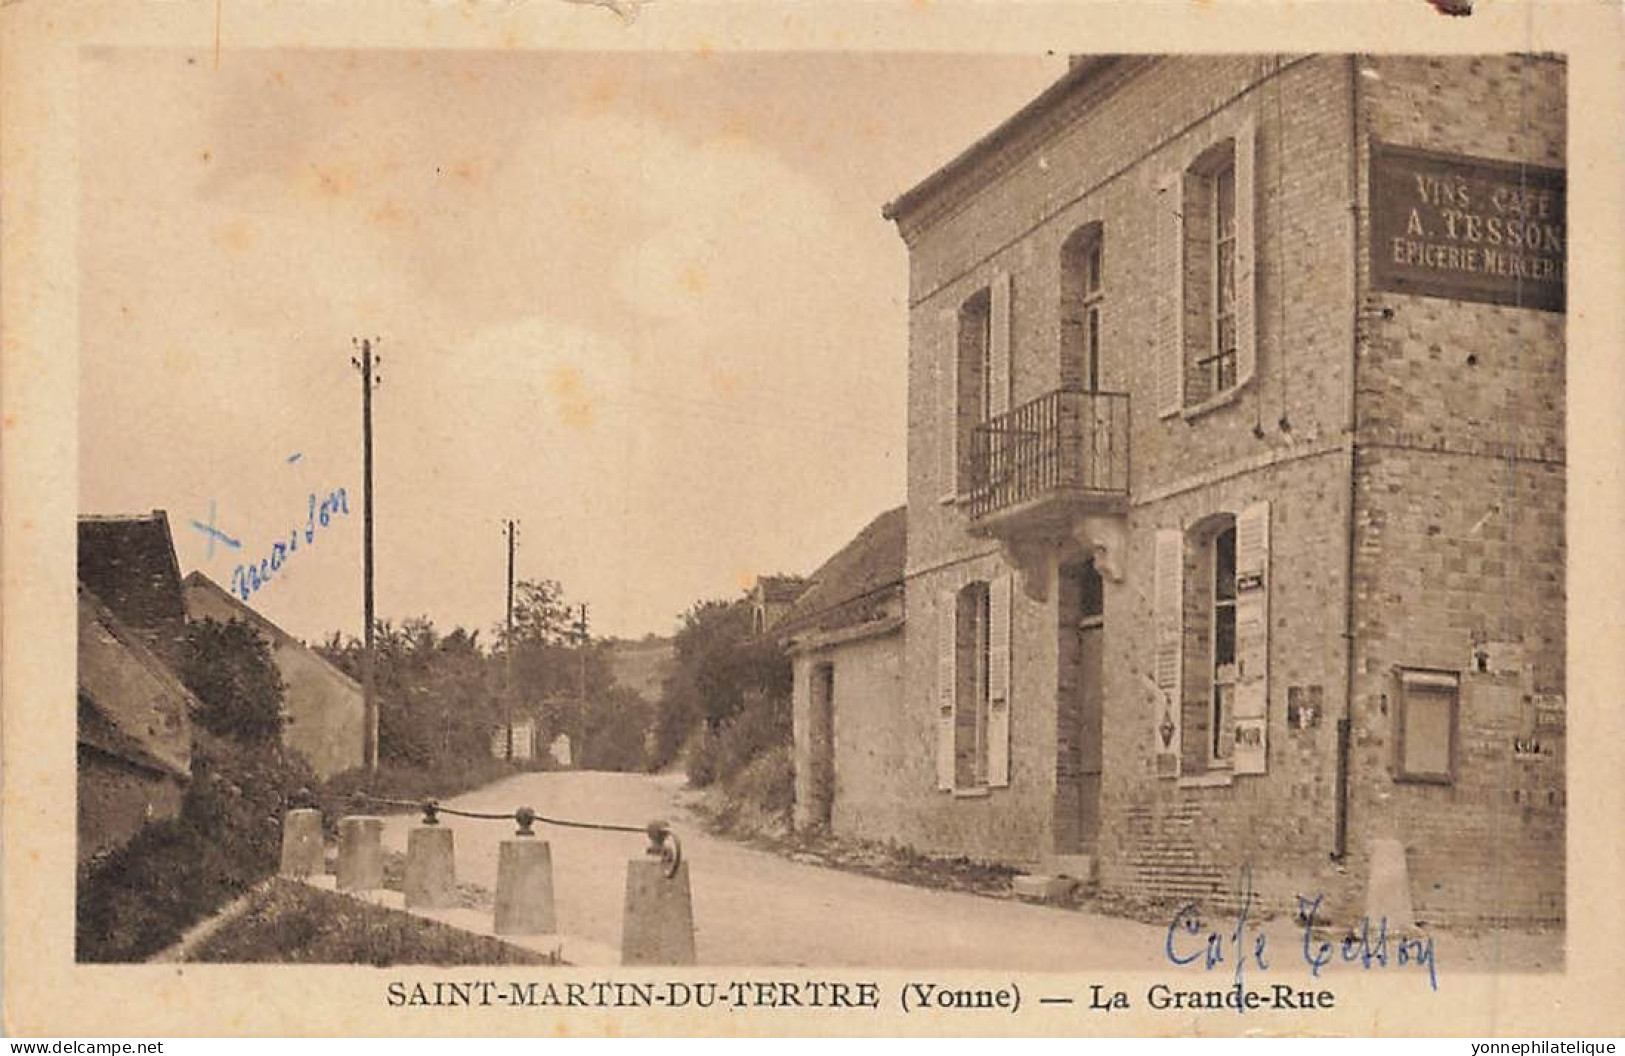 89 - YONNE - SAINT-MARTIN-DU-TERTRE - La Grande Rue - Maison TESSON, Café, épicerie - 11387 - Saint Martin Du Tertre